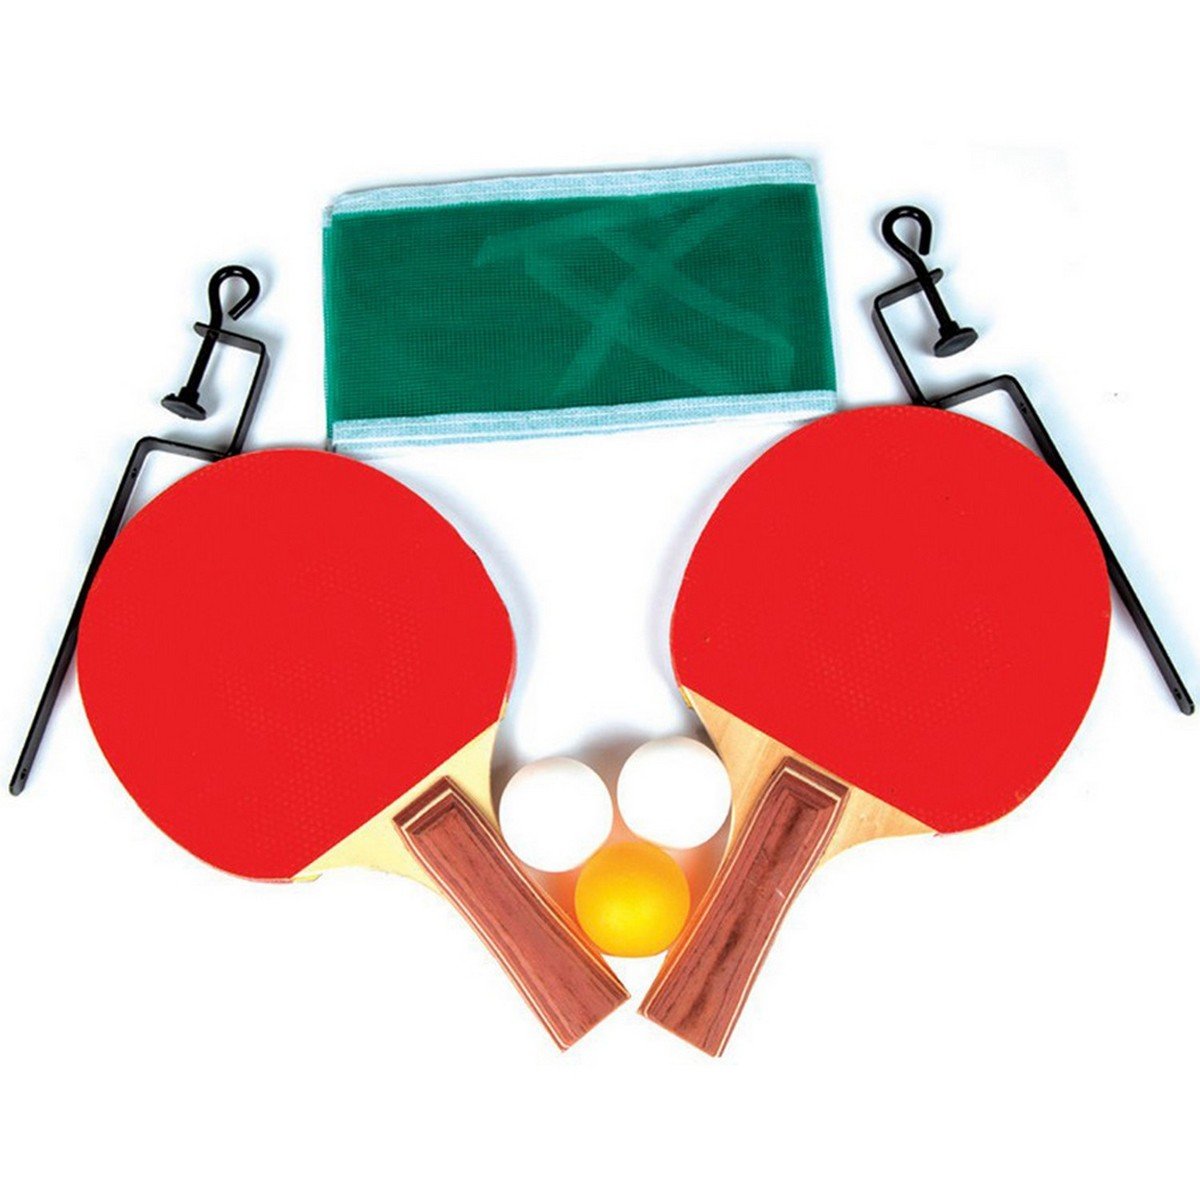 Sports Champion Table Tennis Raket Set AT-307 Assorted